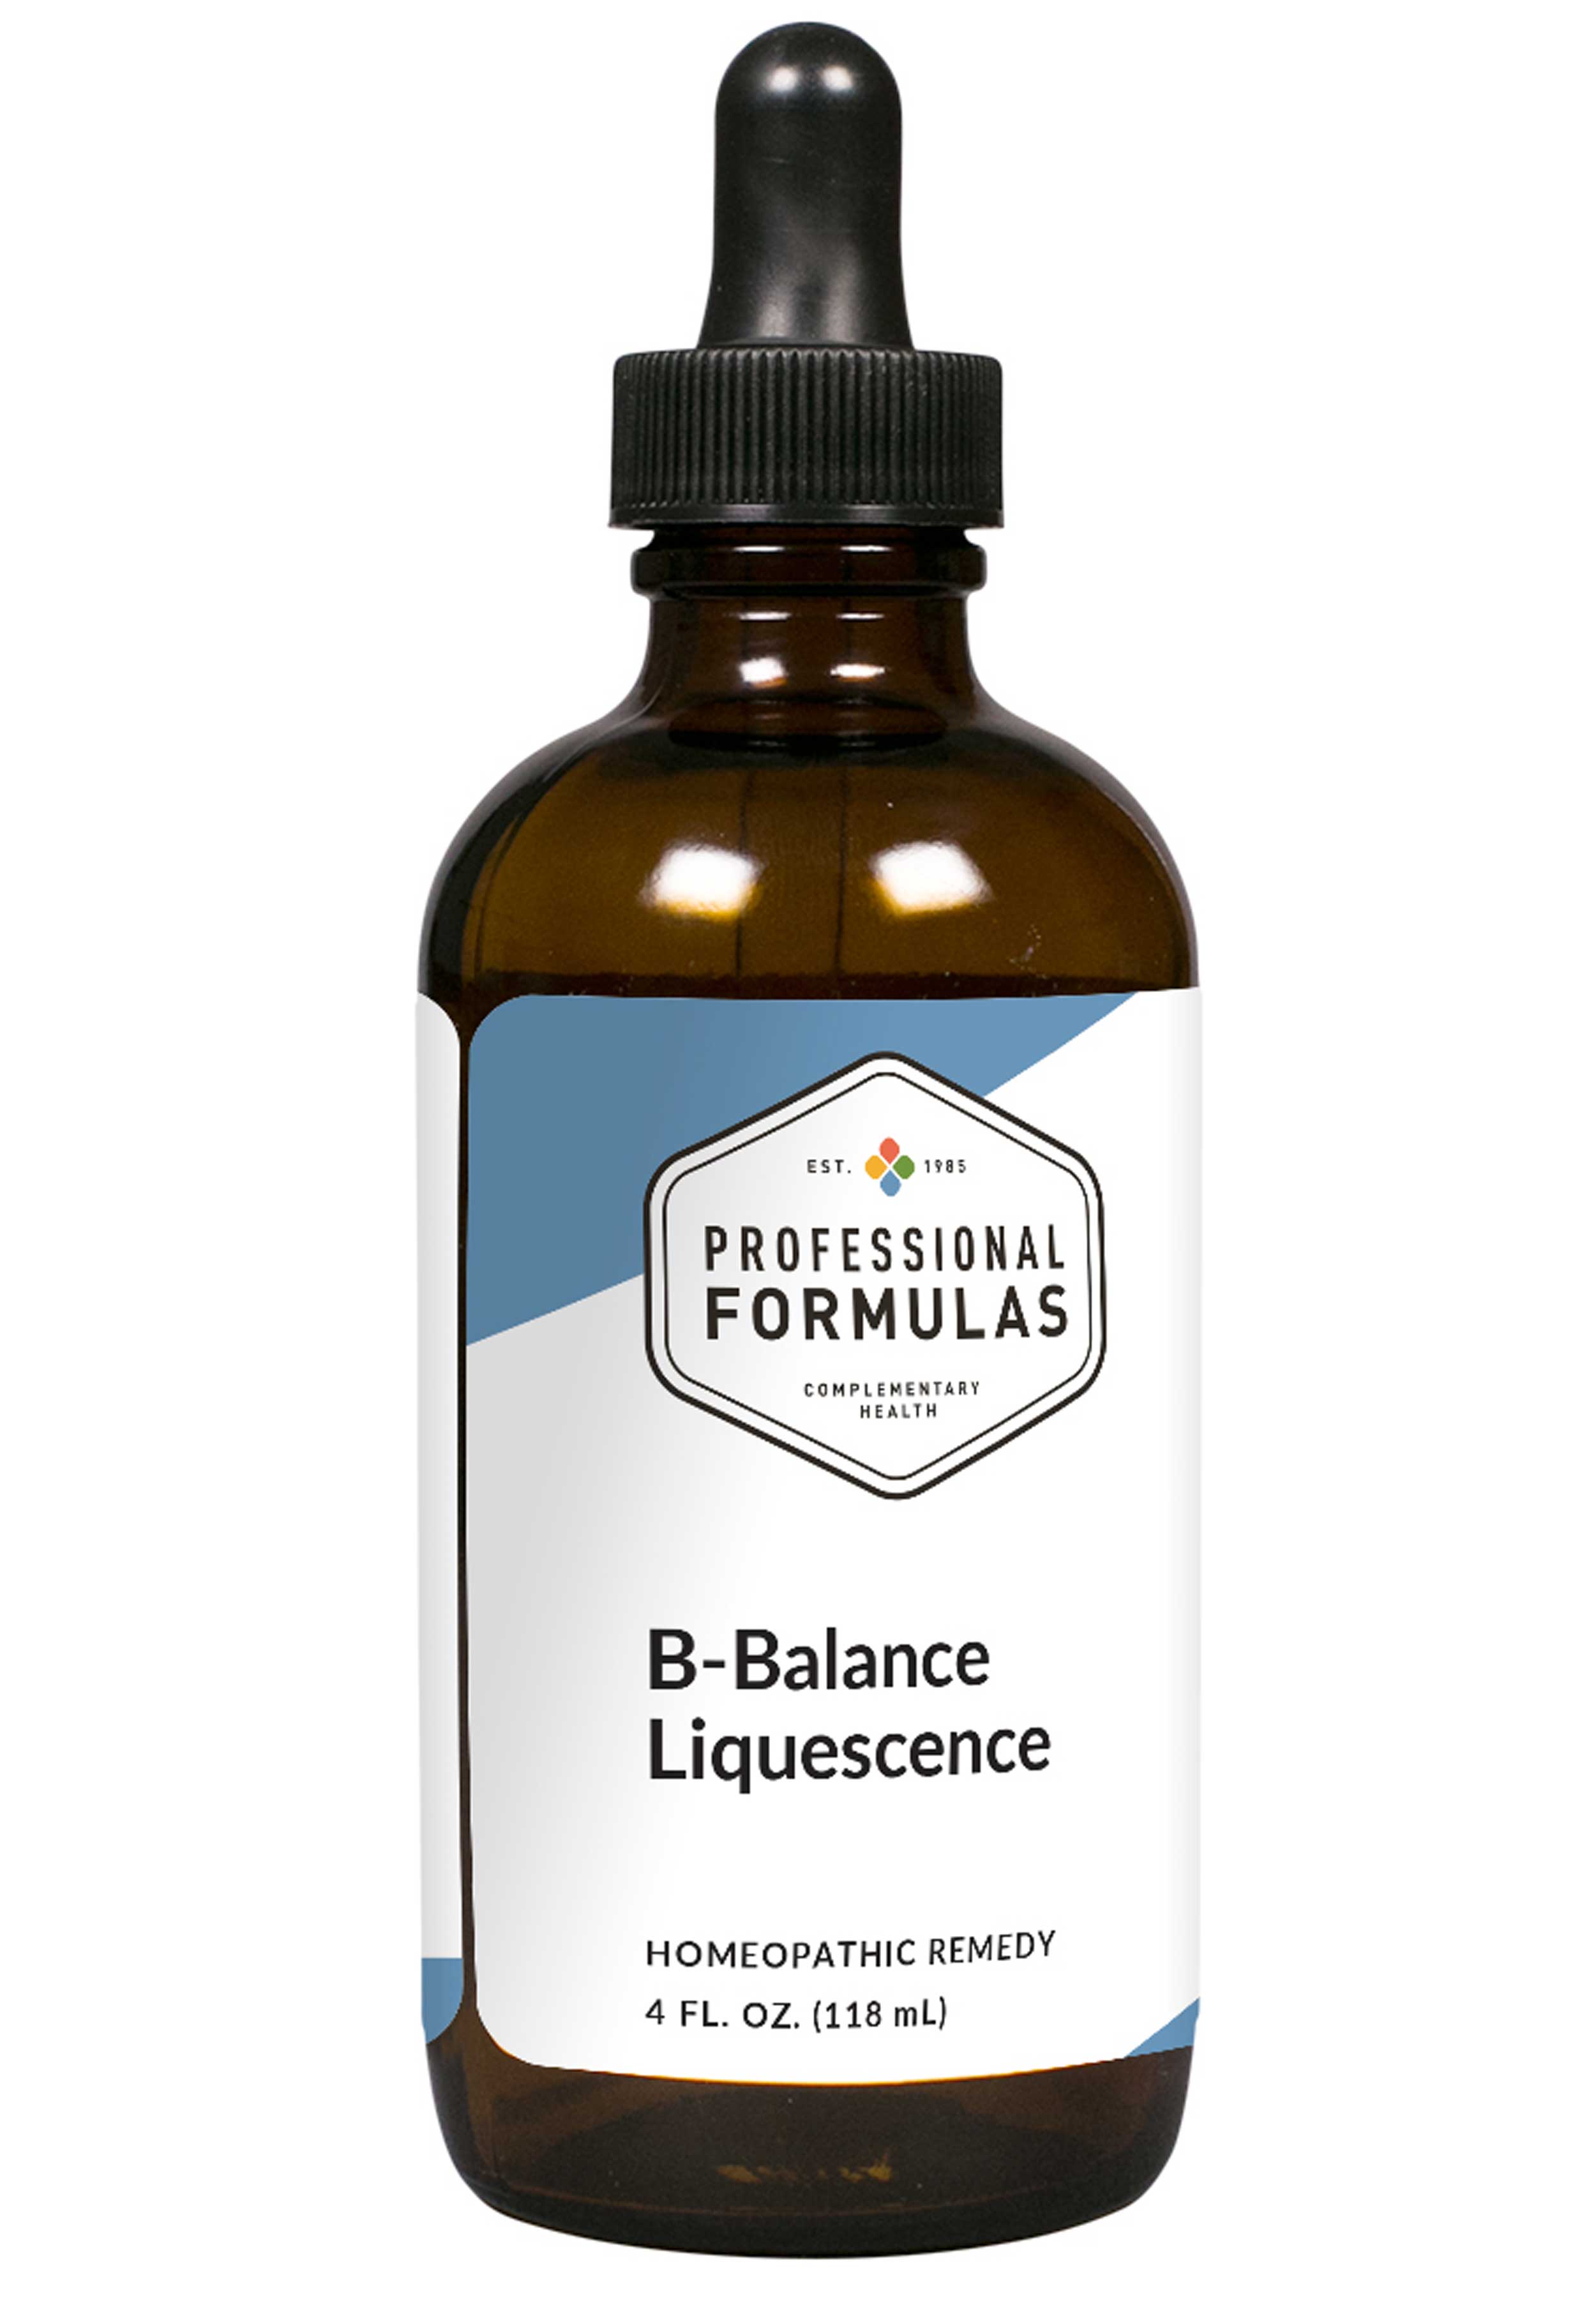 Professional Formulas B-Balance Liquescence